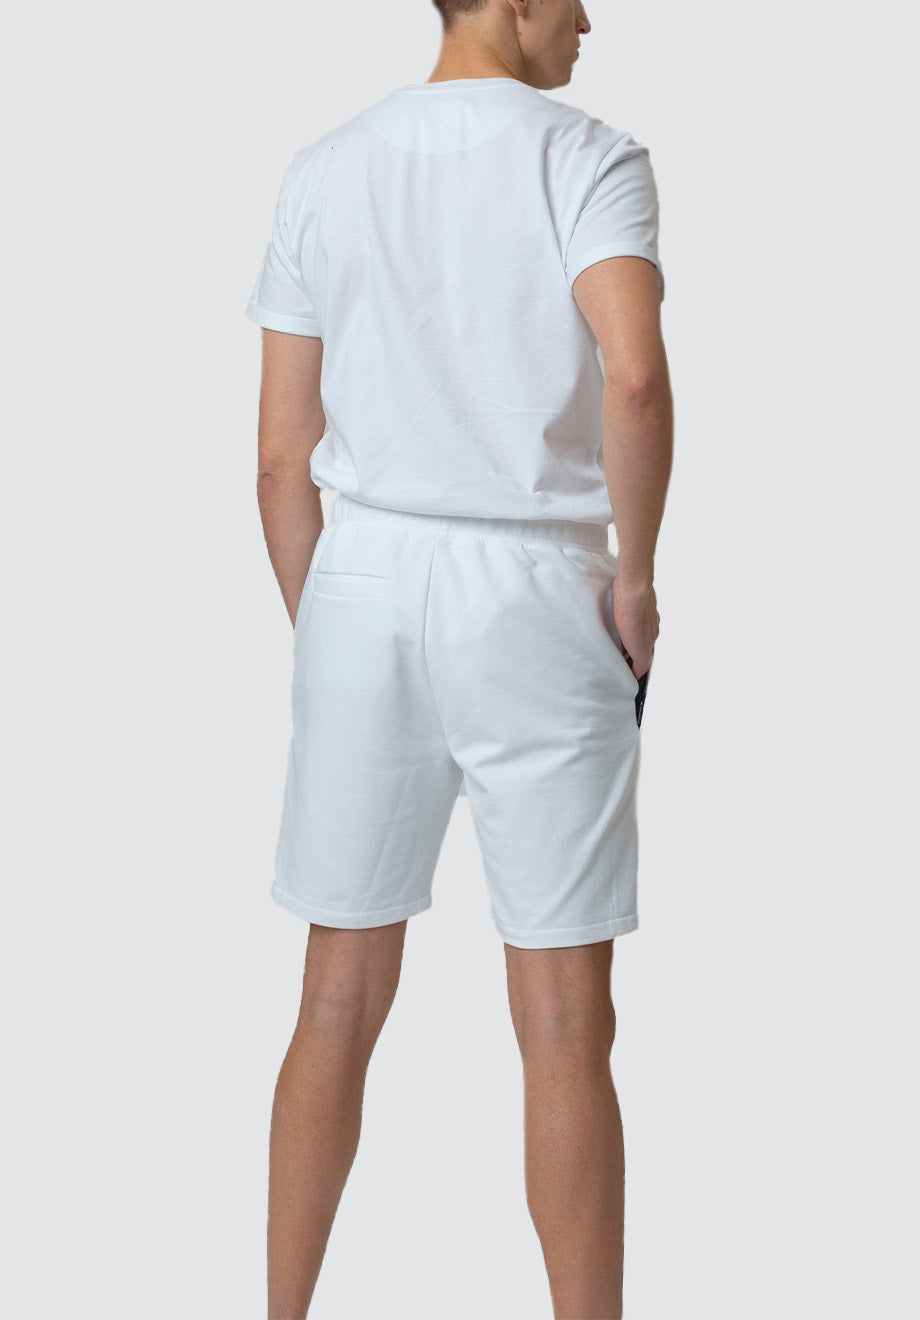 Men's Shorts Memore | White